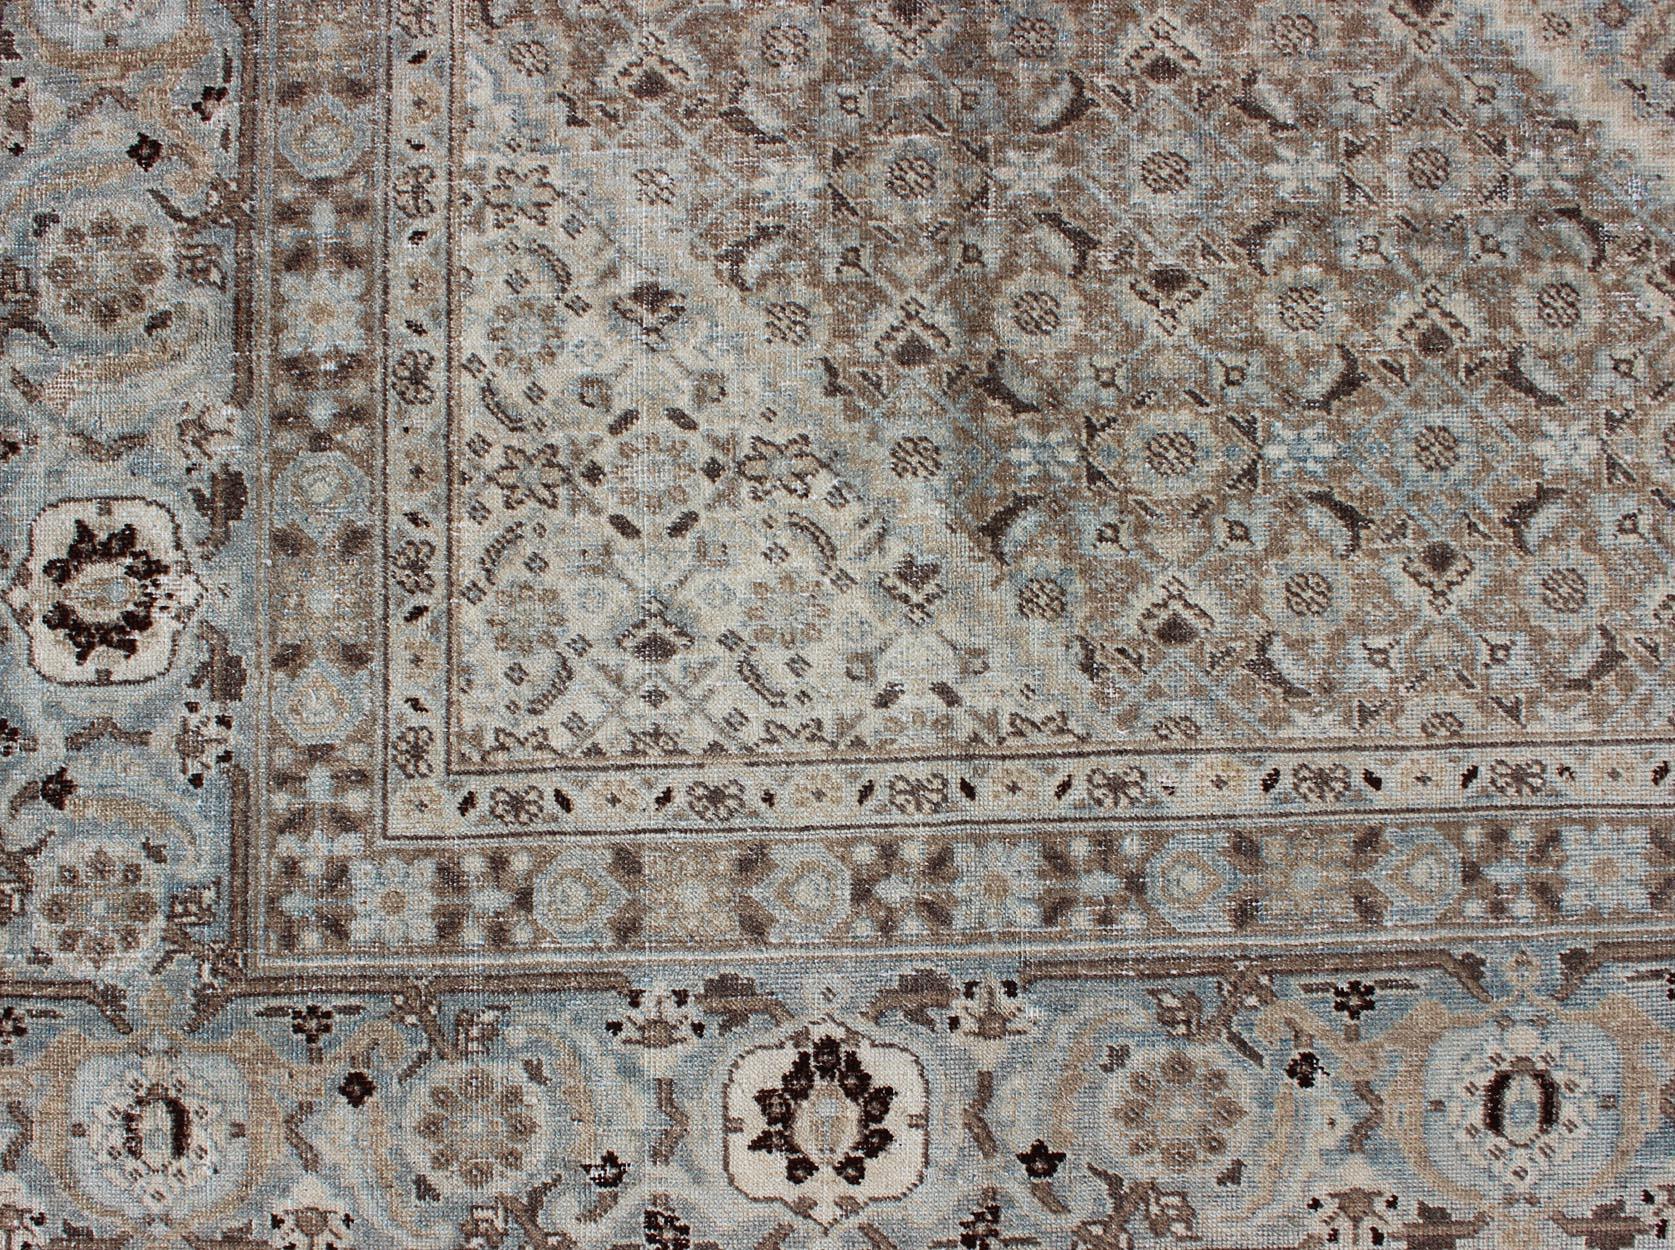 Antique Persian Tabriz Rug with a Geometric Diamond Design For Sale 4